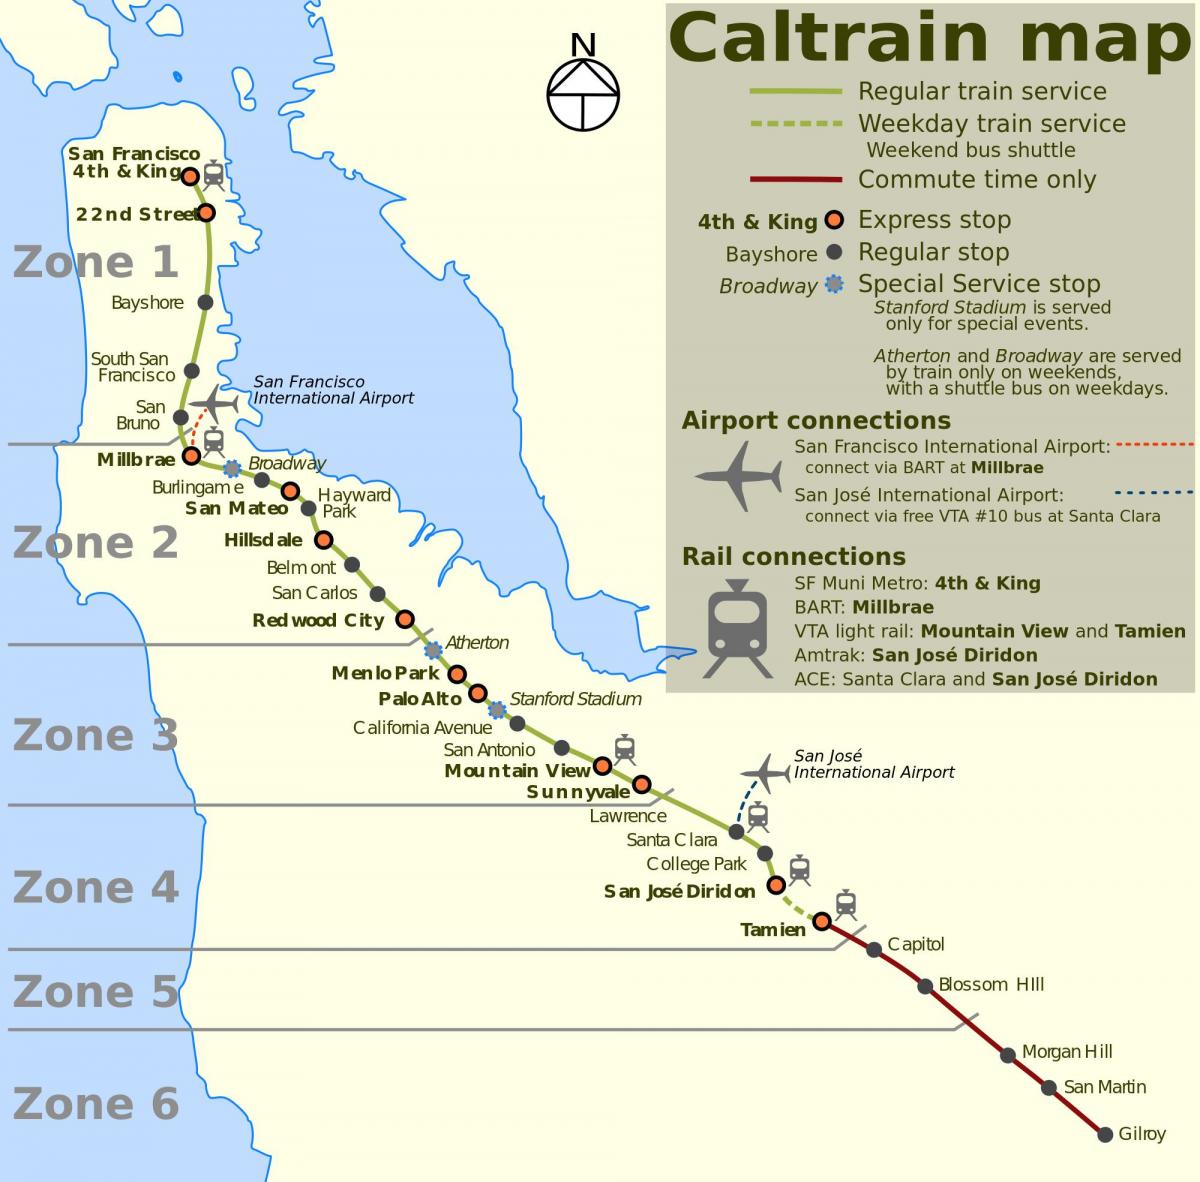 San Francisco caltrain-kort